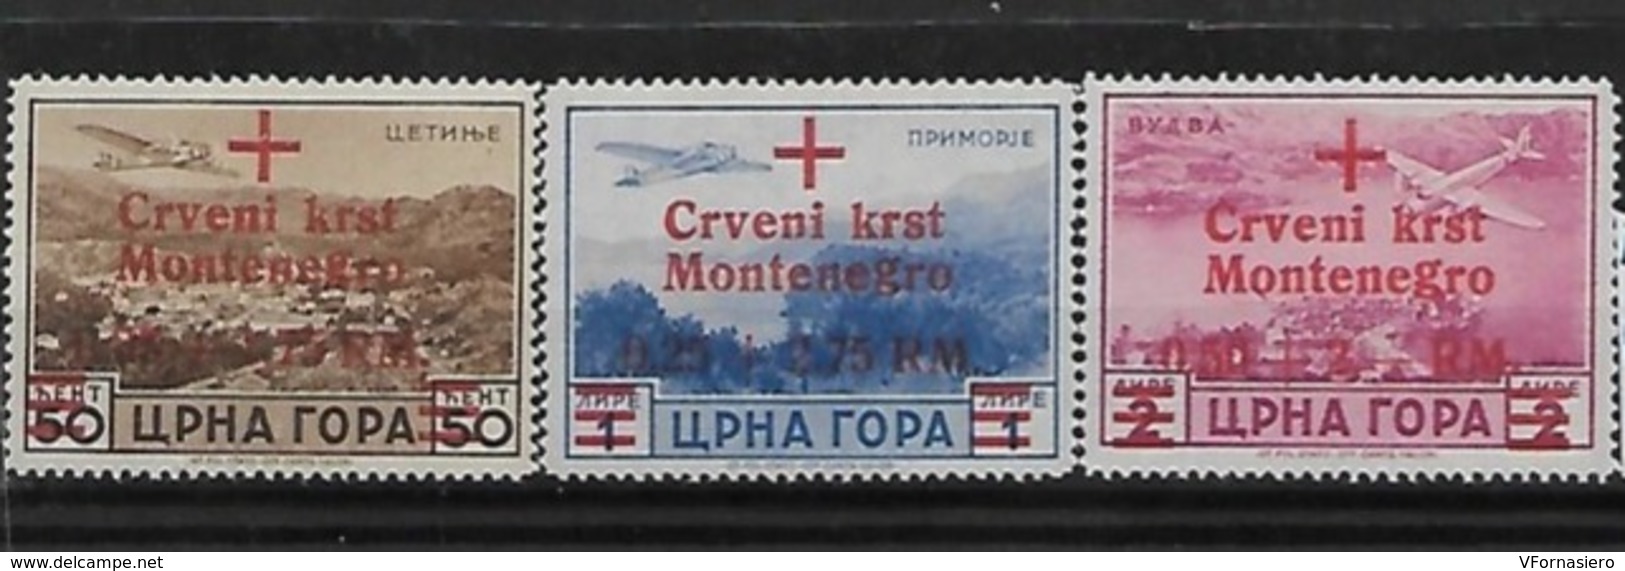 MONTENEGRO **1944 OCCUPAZIONE TEDESCA, POSTA AEREA - Deutsche Bes.: Montenegro